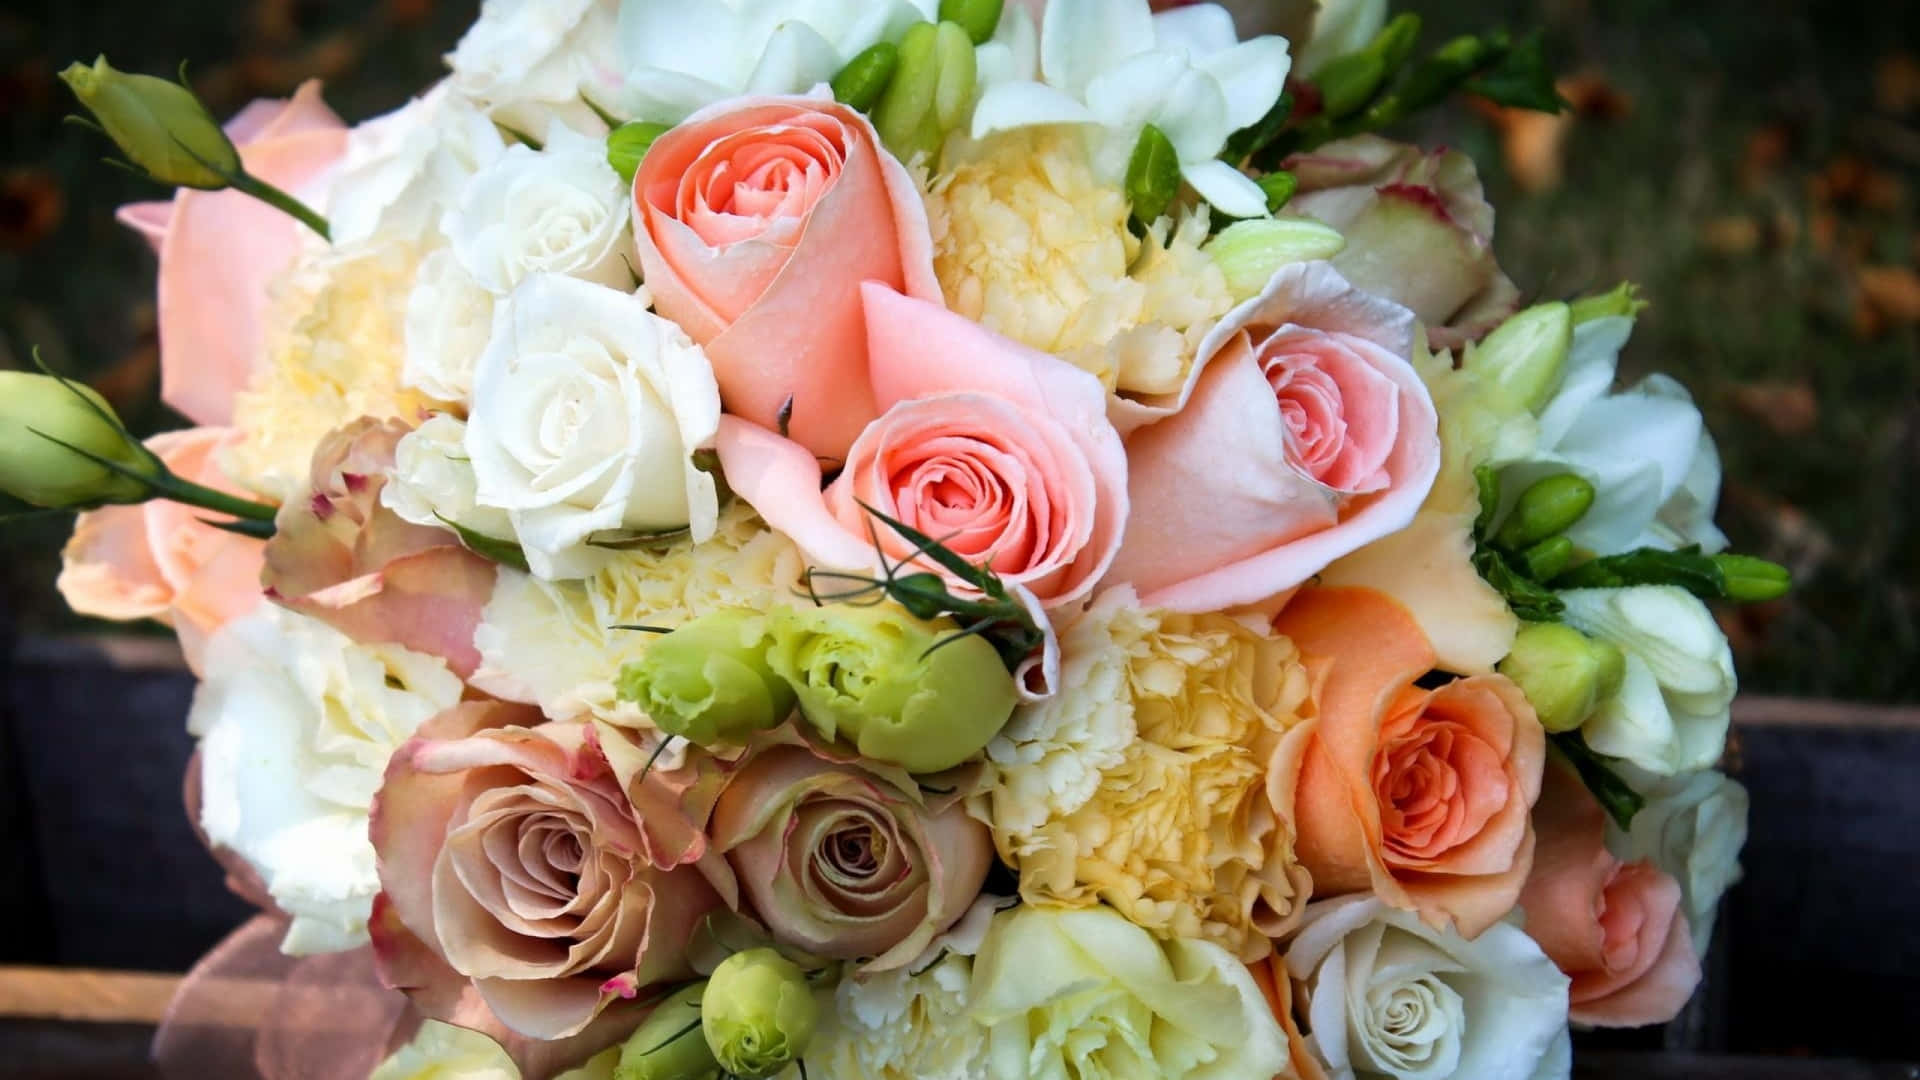 1440p Wedding Bouquet Roses Background